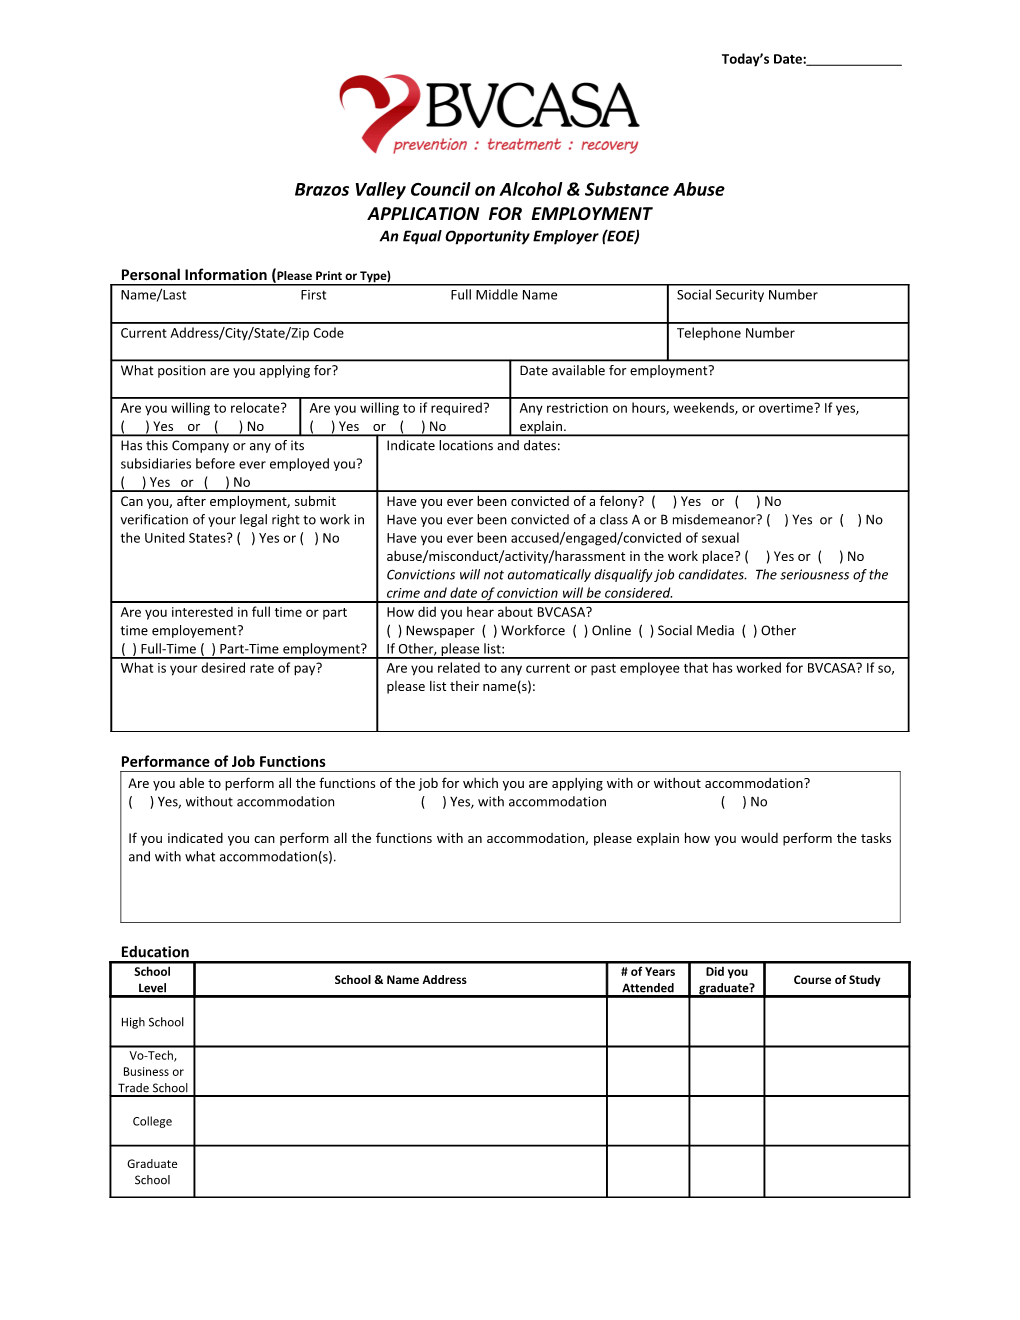 Application Form for Bvcasa 7/14/94